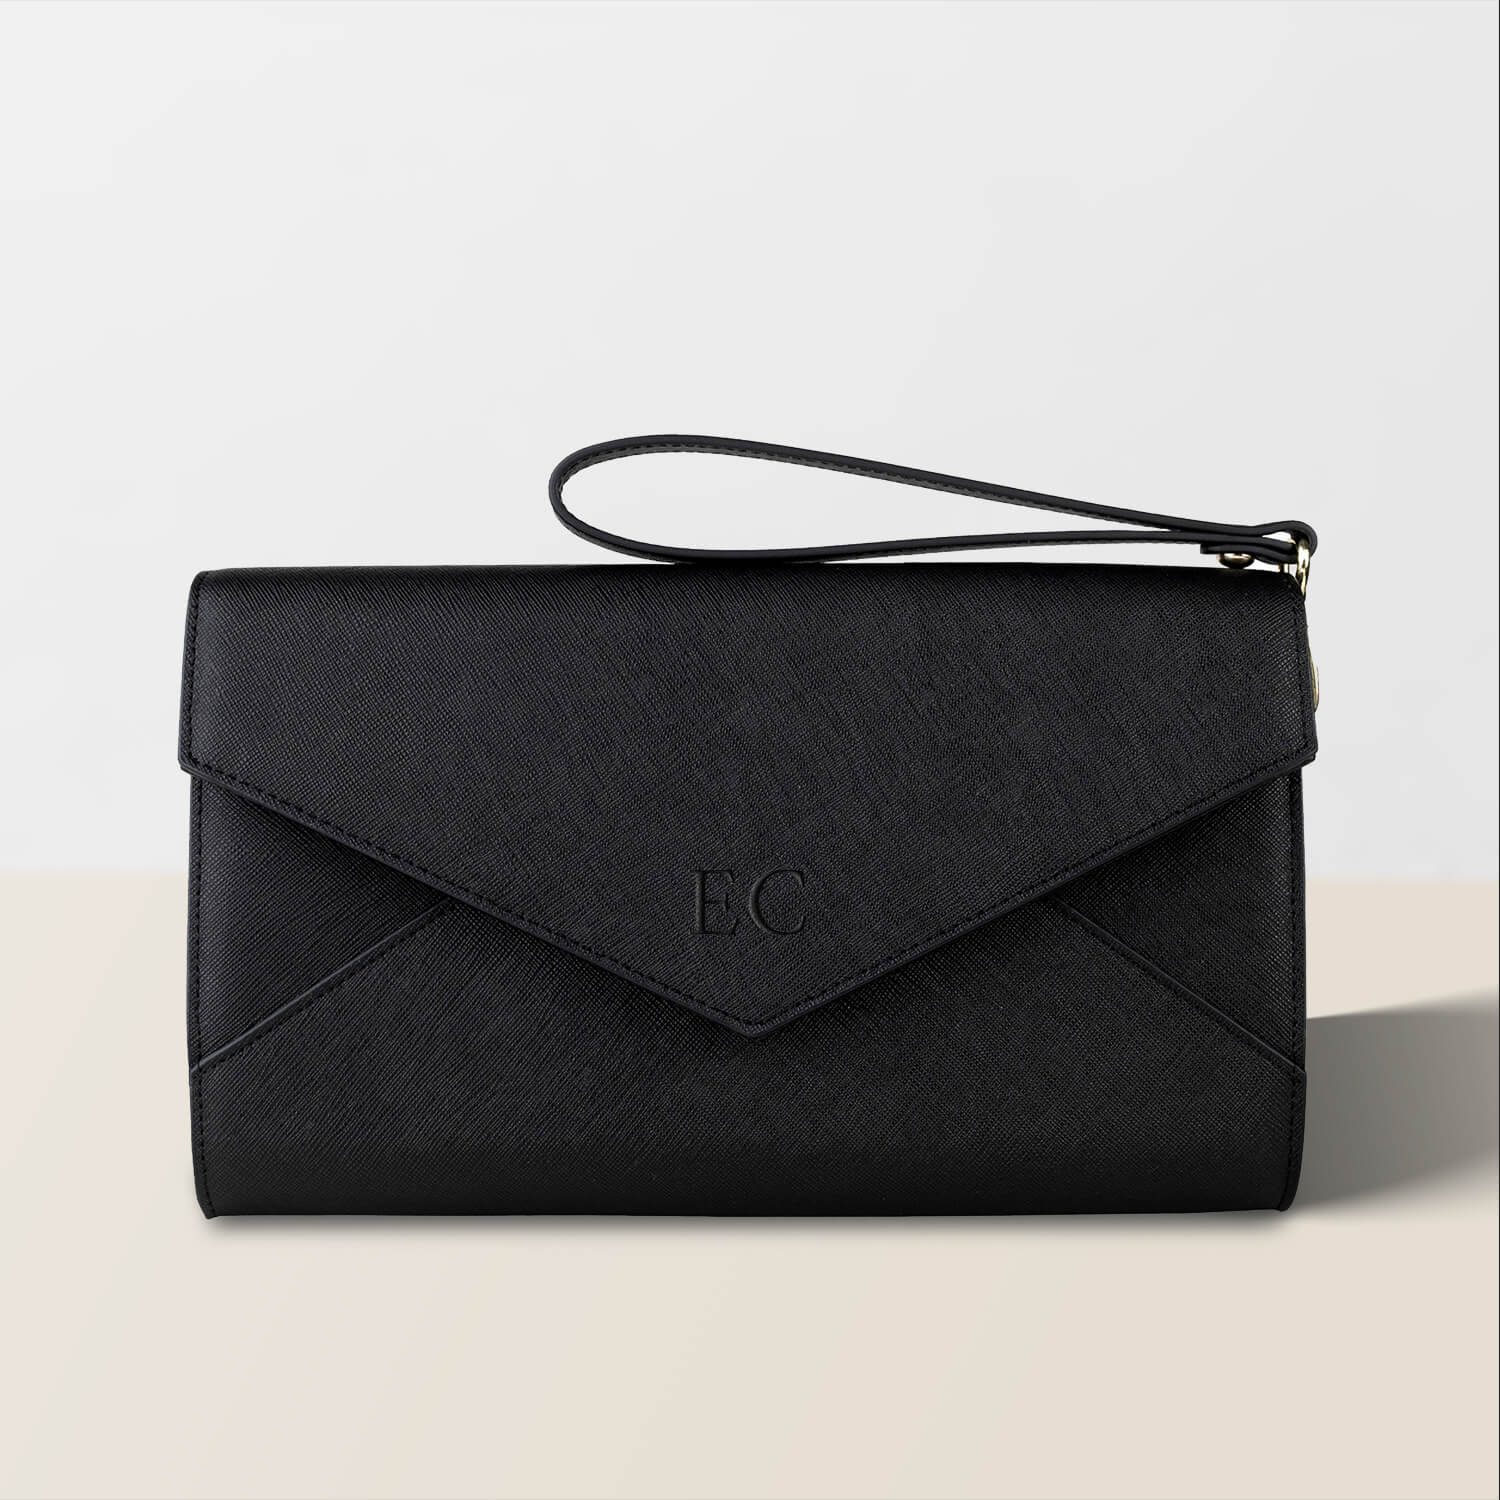 Bigallo | Women's clutch bag in leather color black – Il Bisonte